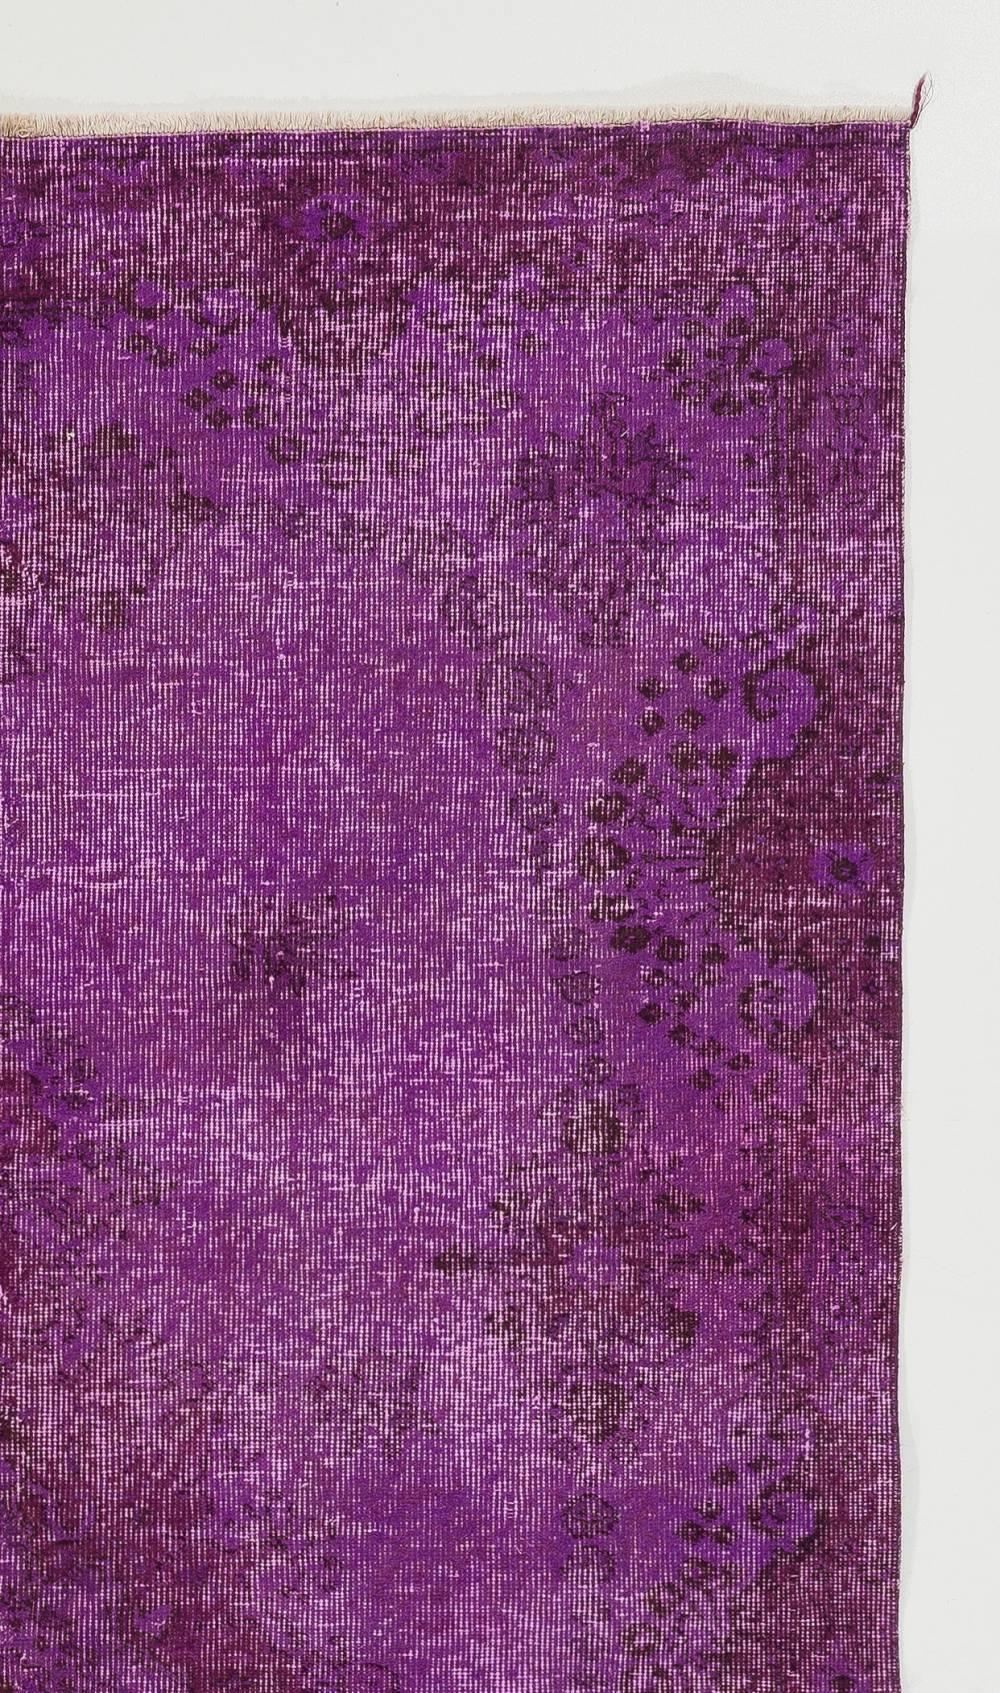 Turkish 5x8.7 Ft Modern Area Rug in Purple. Hand-Knotted in Turkey. Vintage Wool Carpet